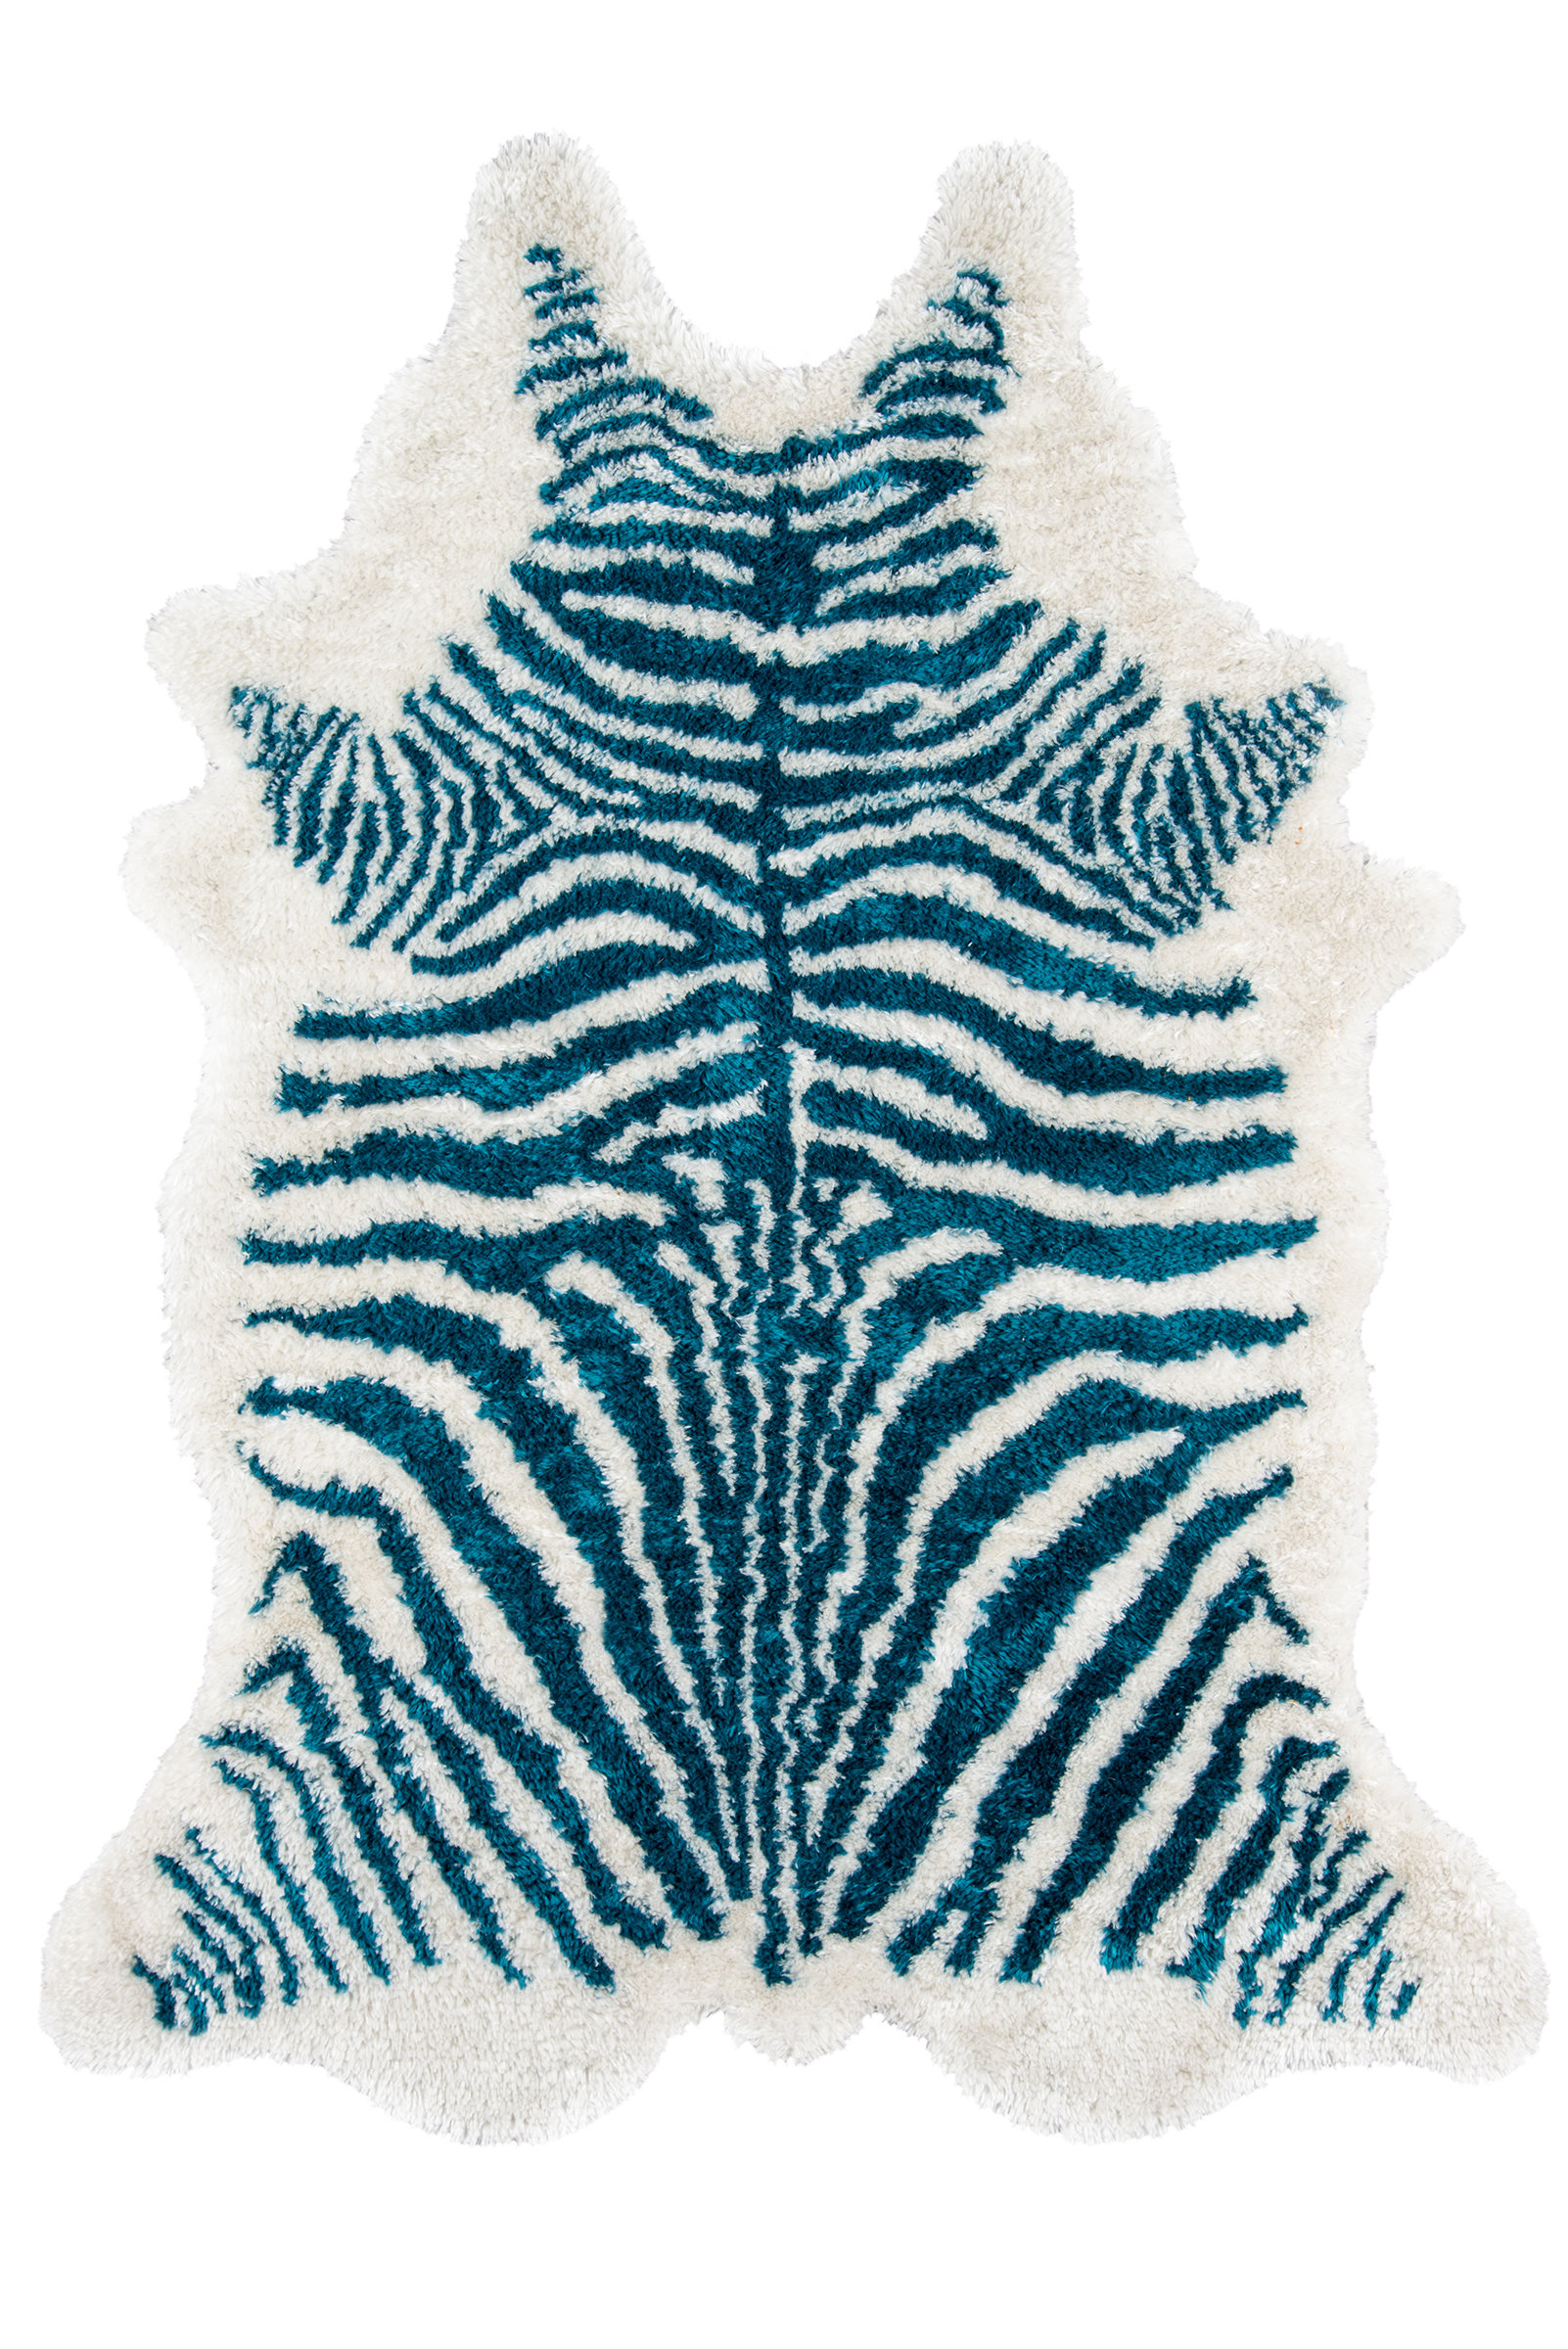 Novogratz Khalhari Animal Print Handmade Tufted Turquoise/White Area Rug &  Reviews - Wayfair Canada